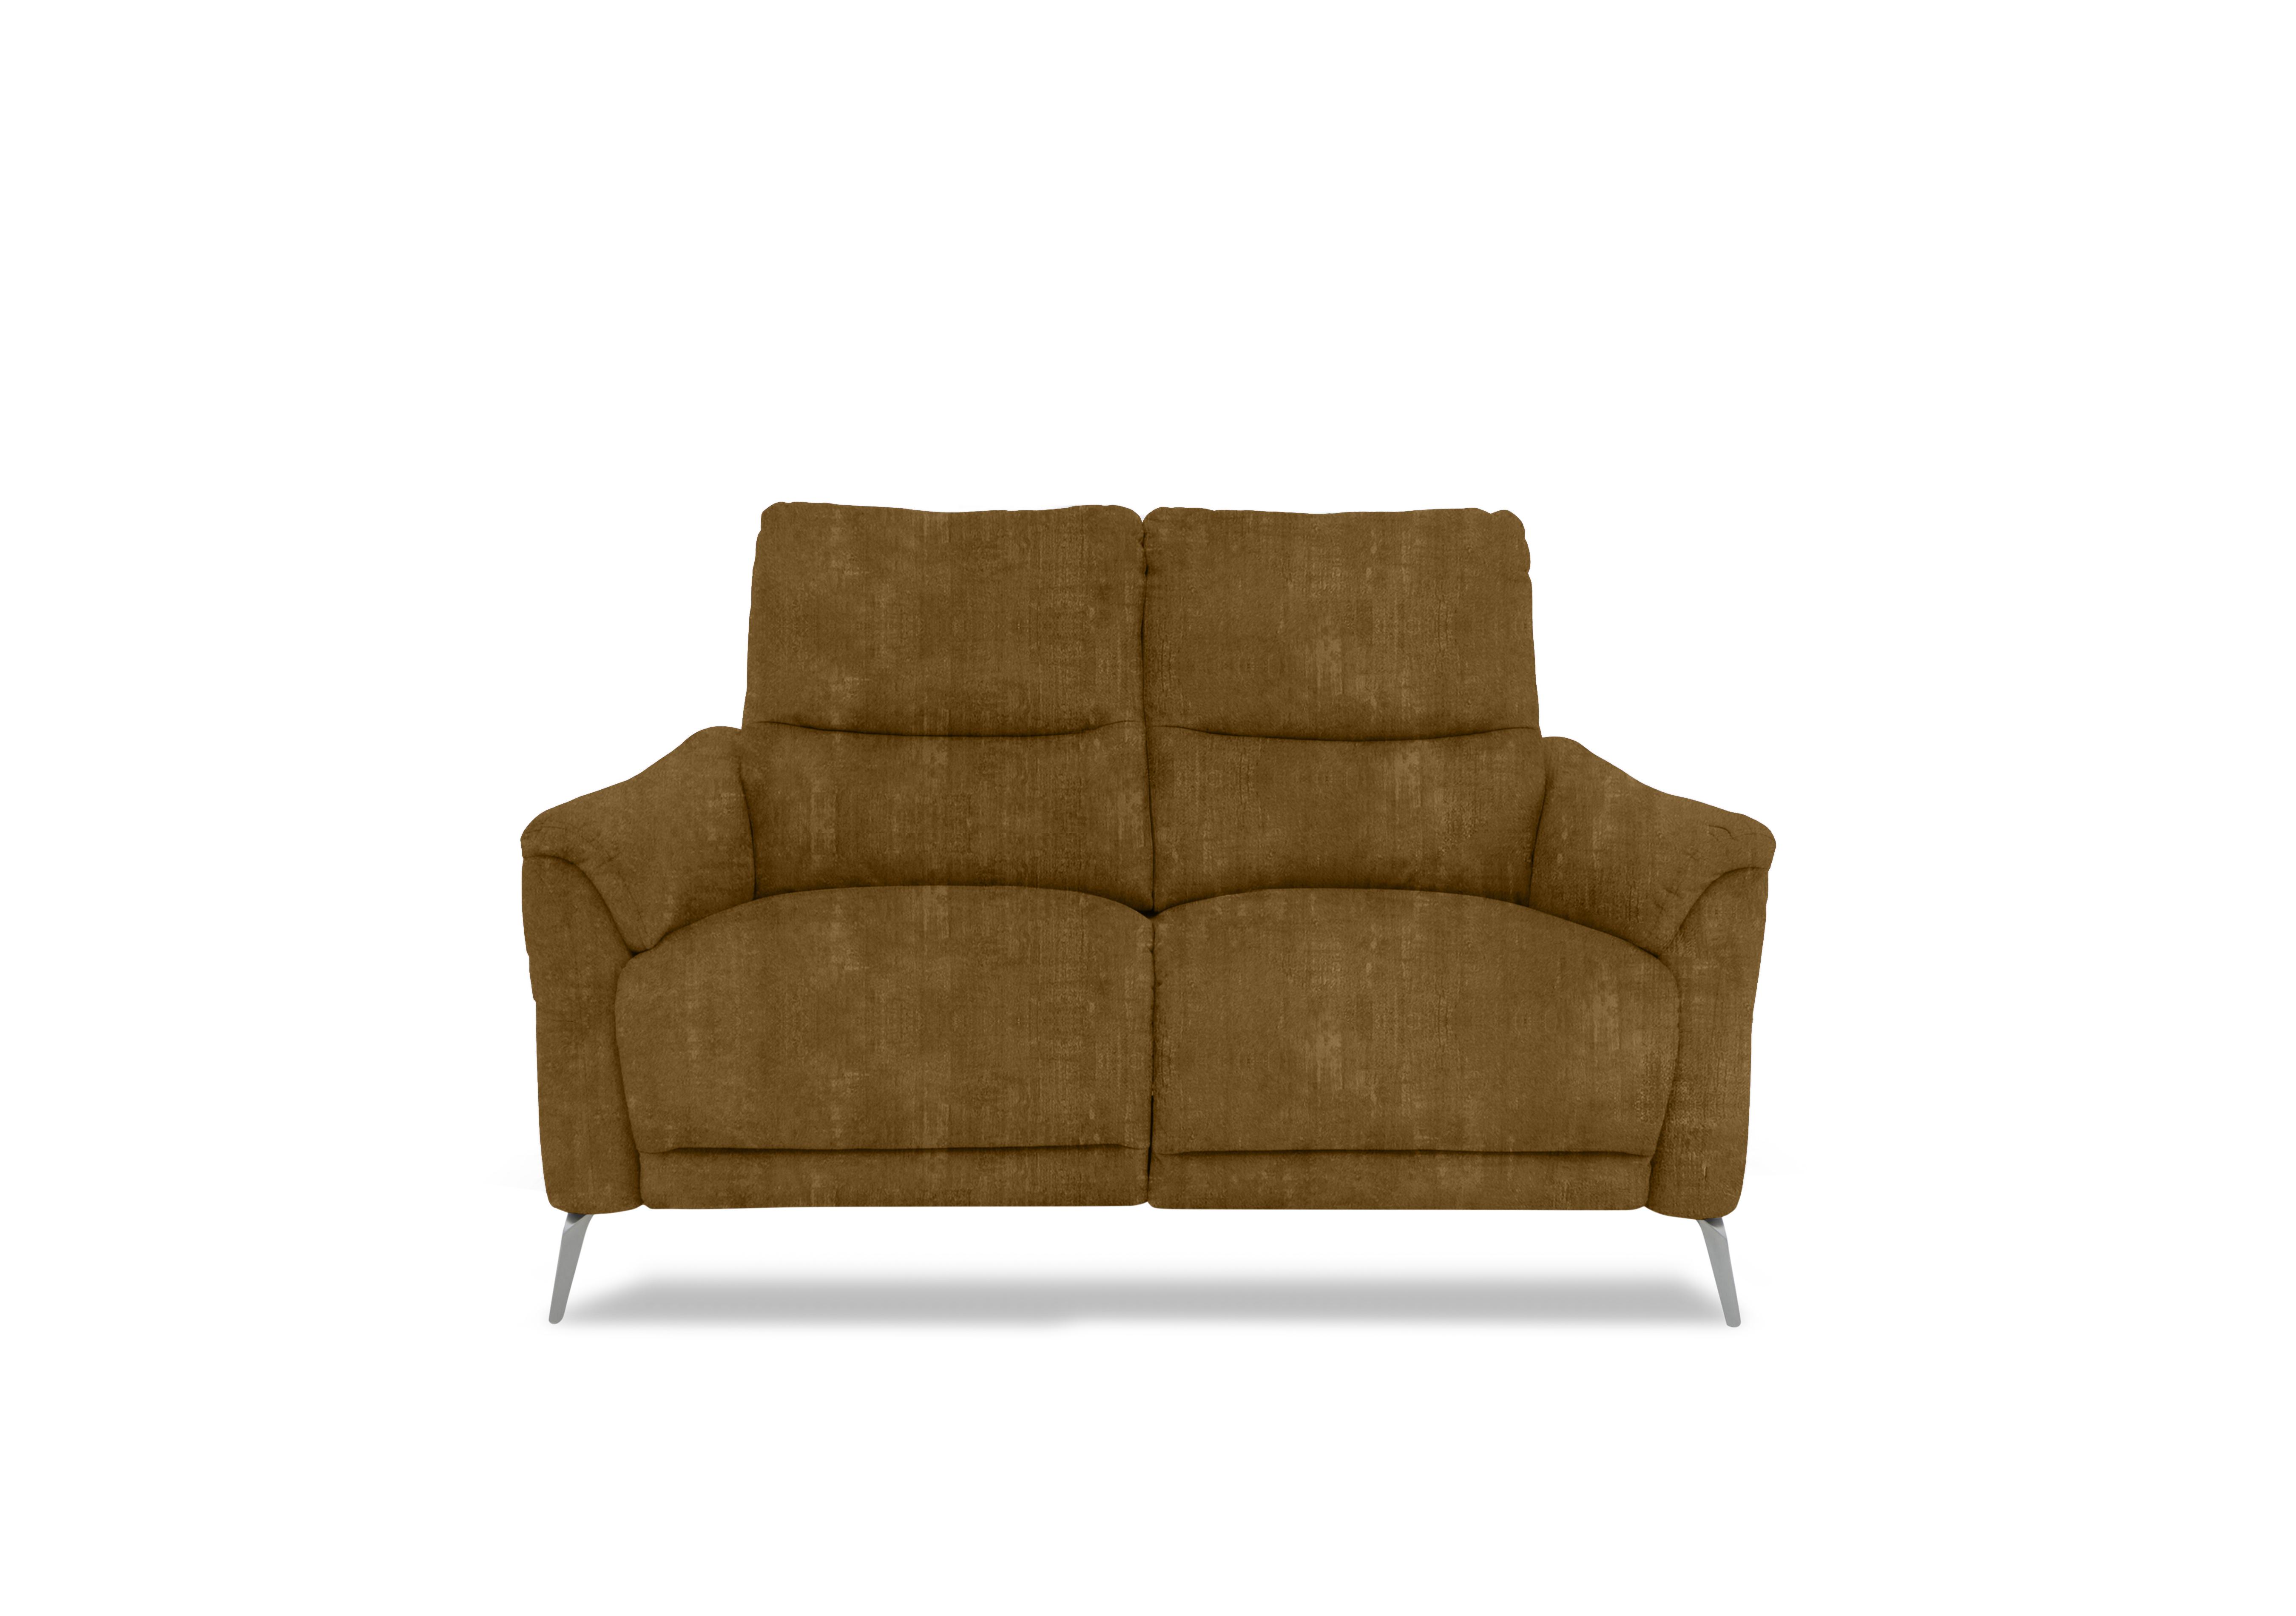 Daytona 2 Seater Fabric Sofa in 52002 Heritage Saffron on Furniture Village